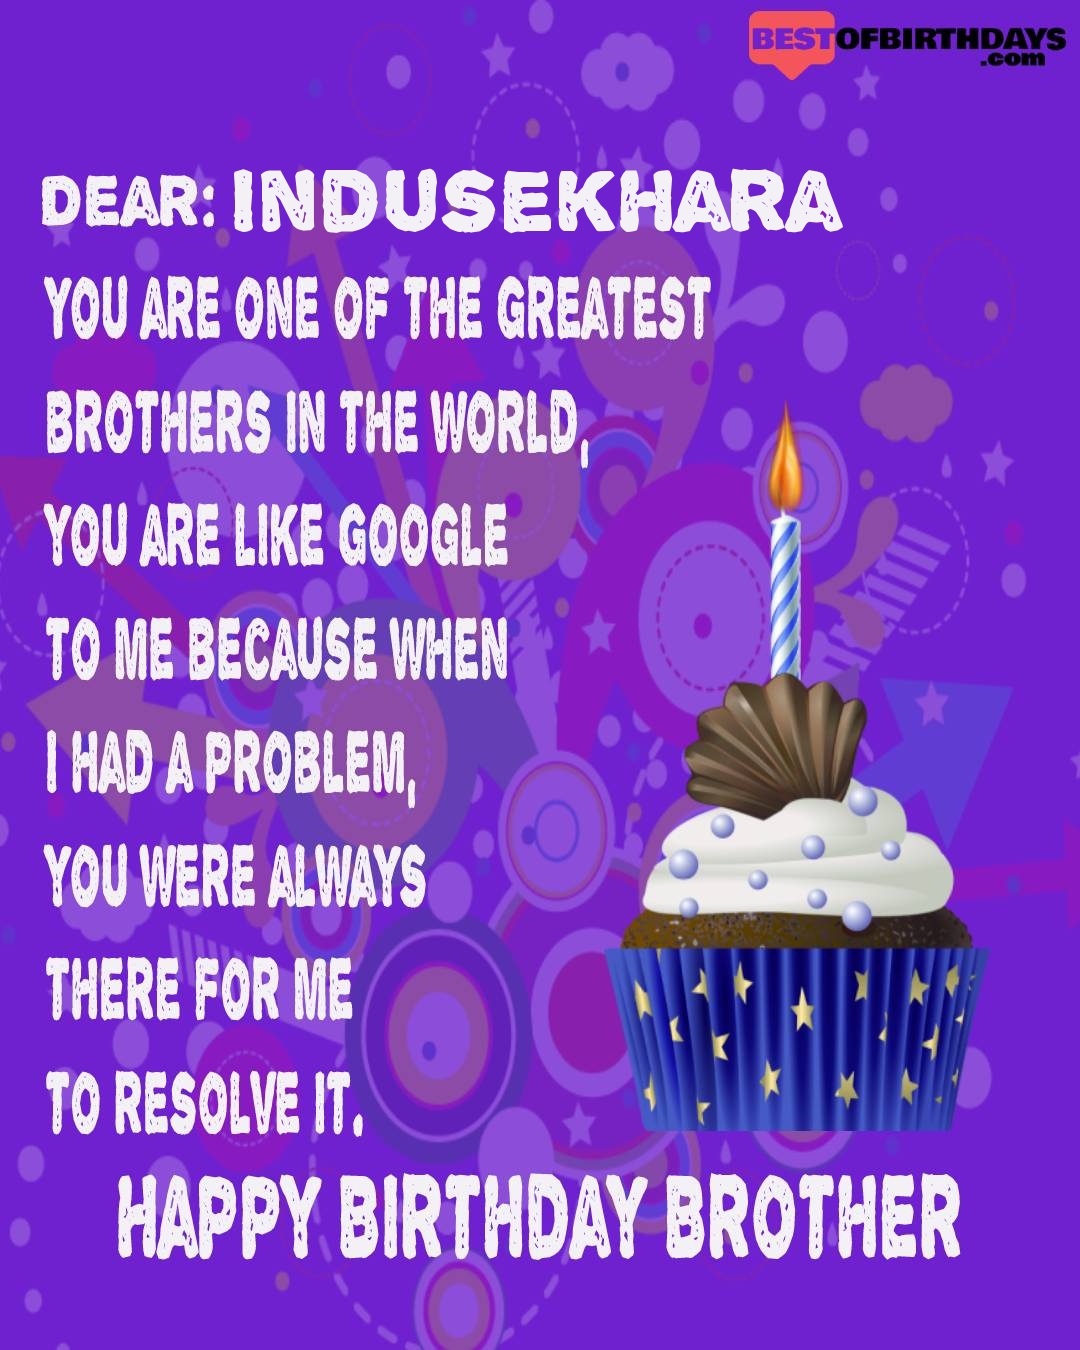 Happy birthday indusekhara bhai brother bro